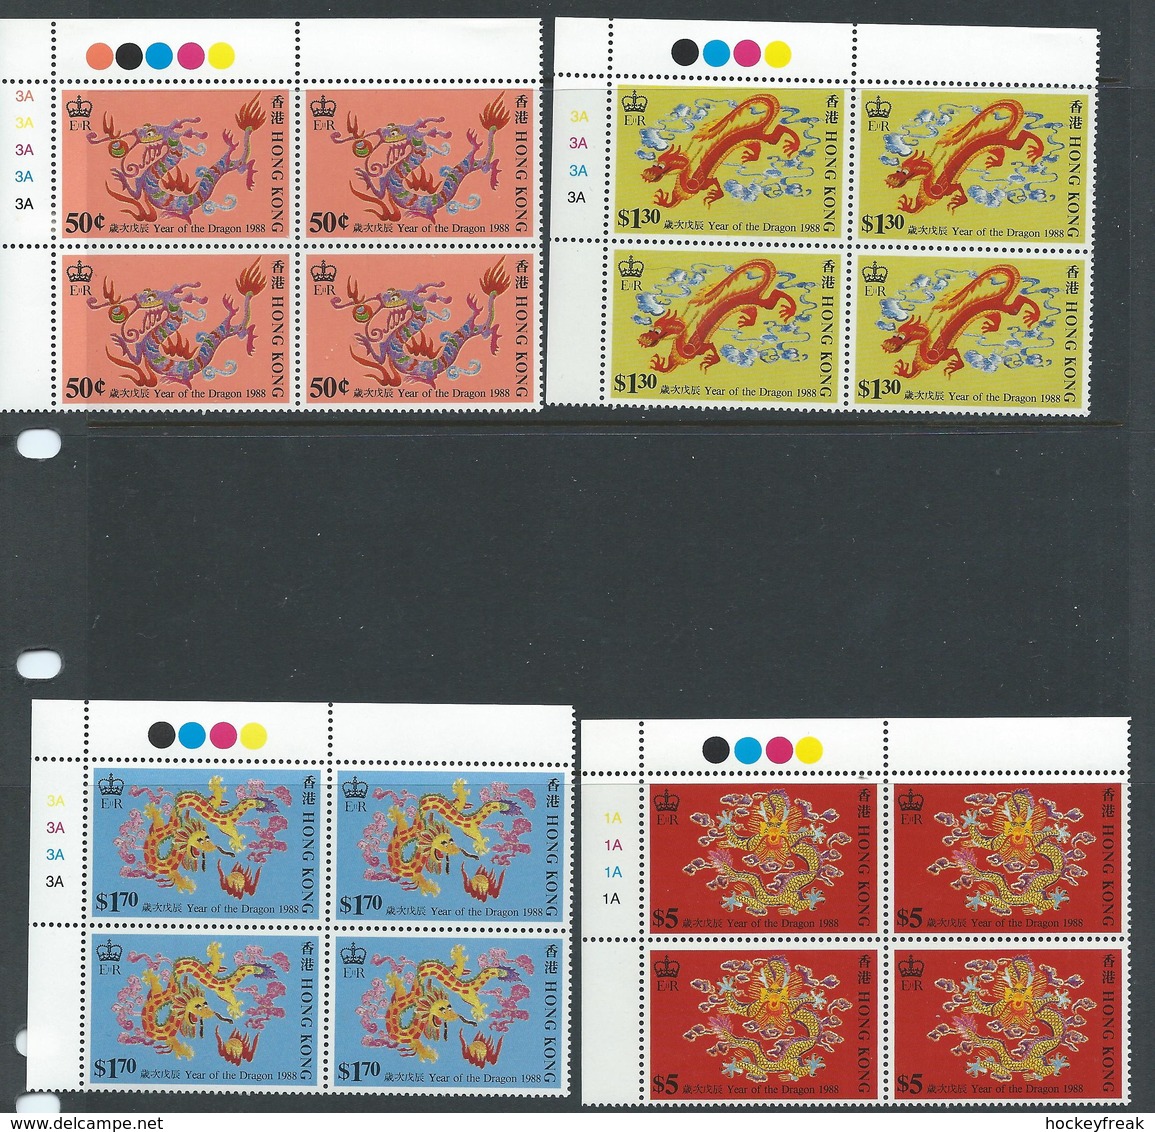 Hong Kong 1988 Year Of The Dragon - Plate Blocks Of 4 SG563-566 MNH Cat £24+ SG2015 - Ongebruikt